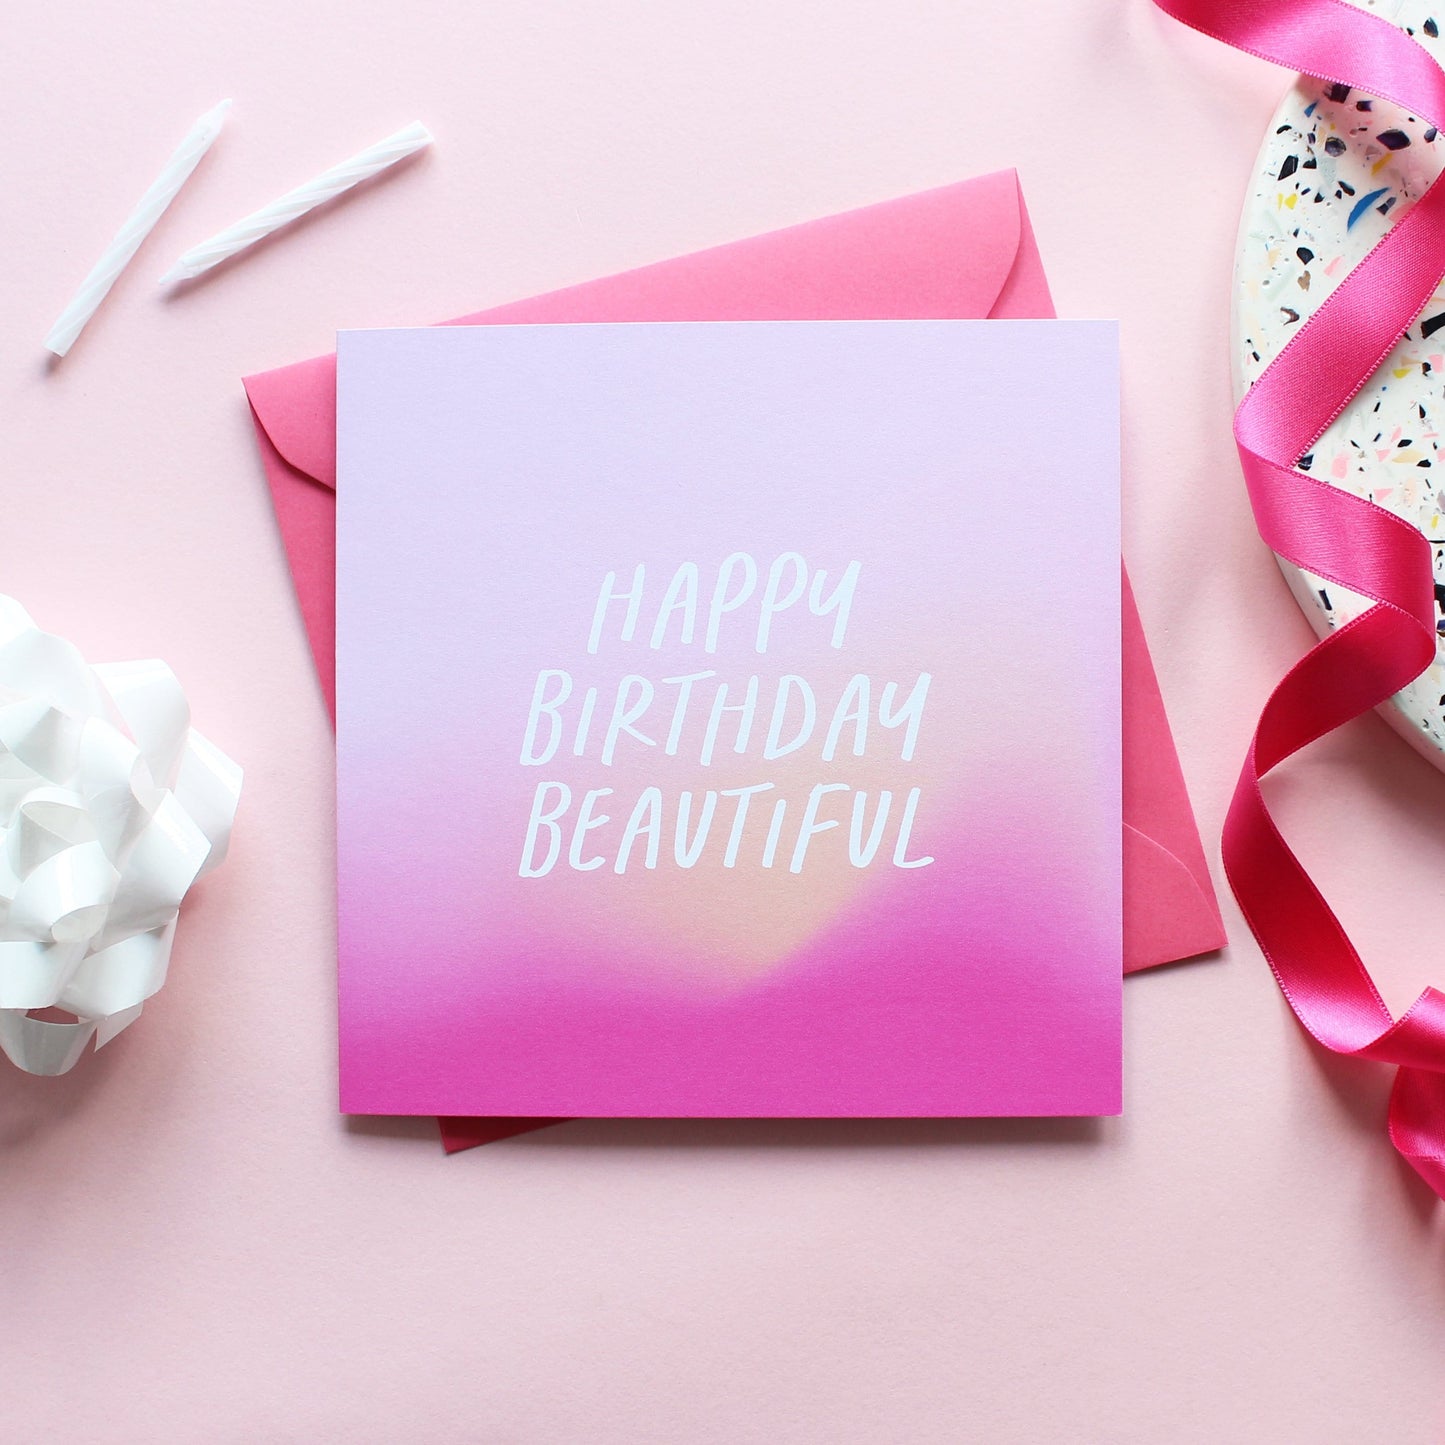 Happy birthday beautiful birthday card from Purple Tree Designs